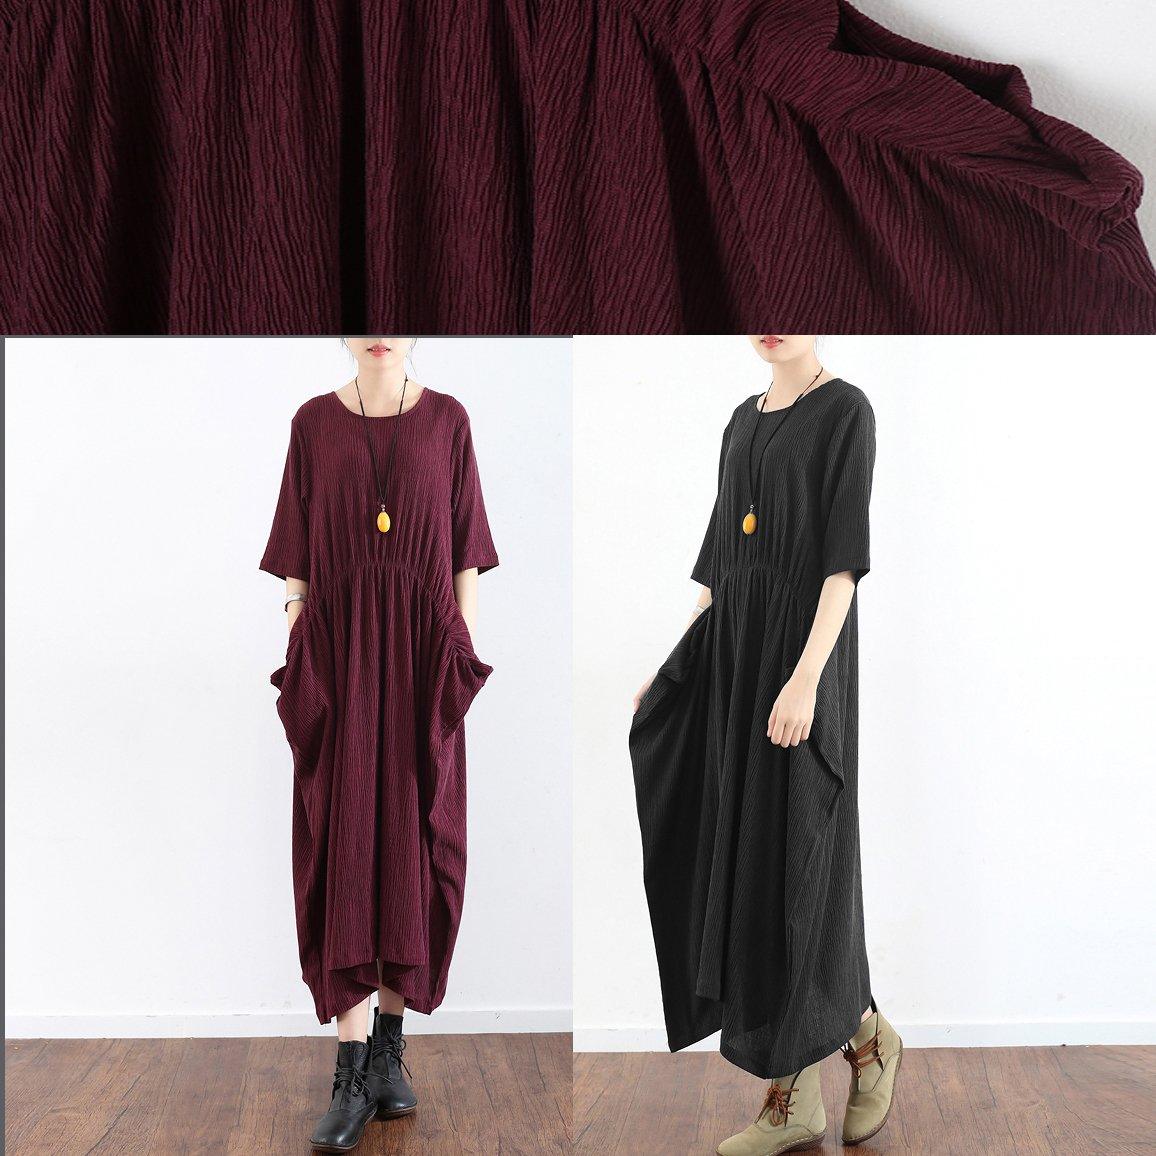 burgundy vintage silk dresses plus size casual half sleeve dress 2017 trend fall elastic waist maxi dress - Omychic